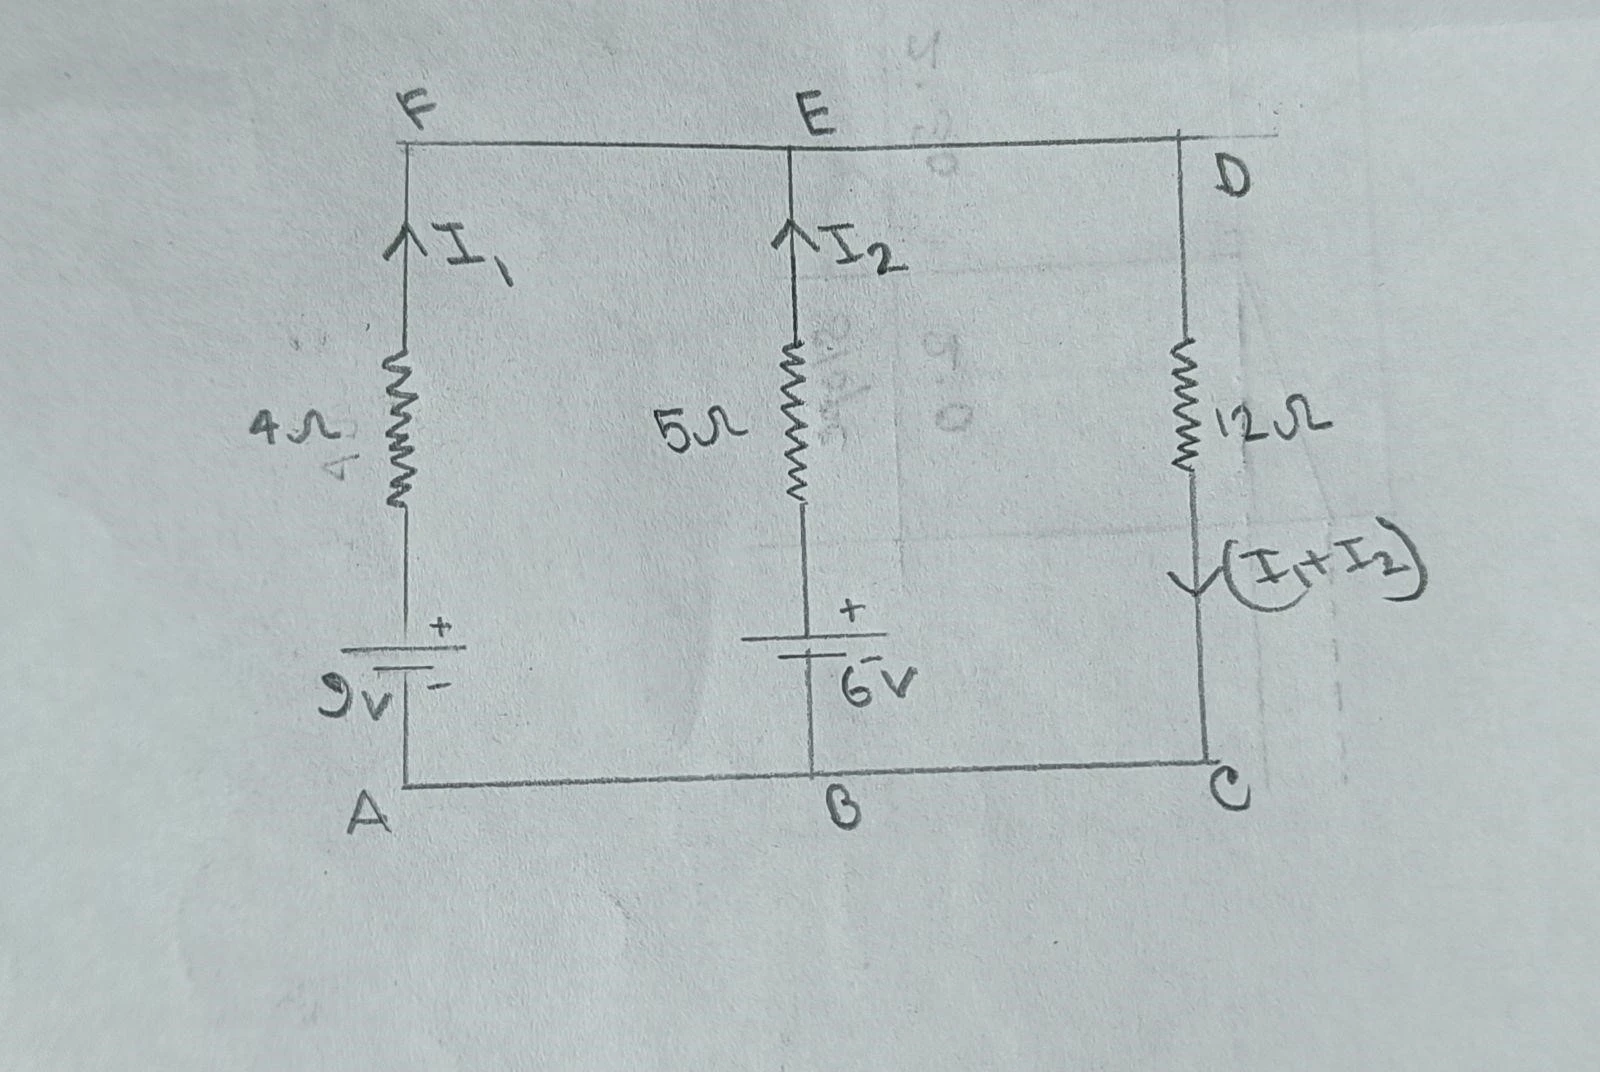 Assumed network diagram of task 4